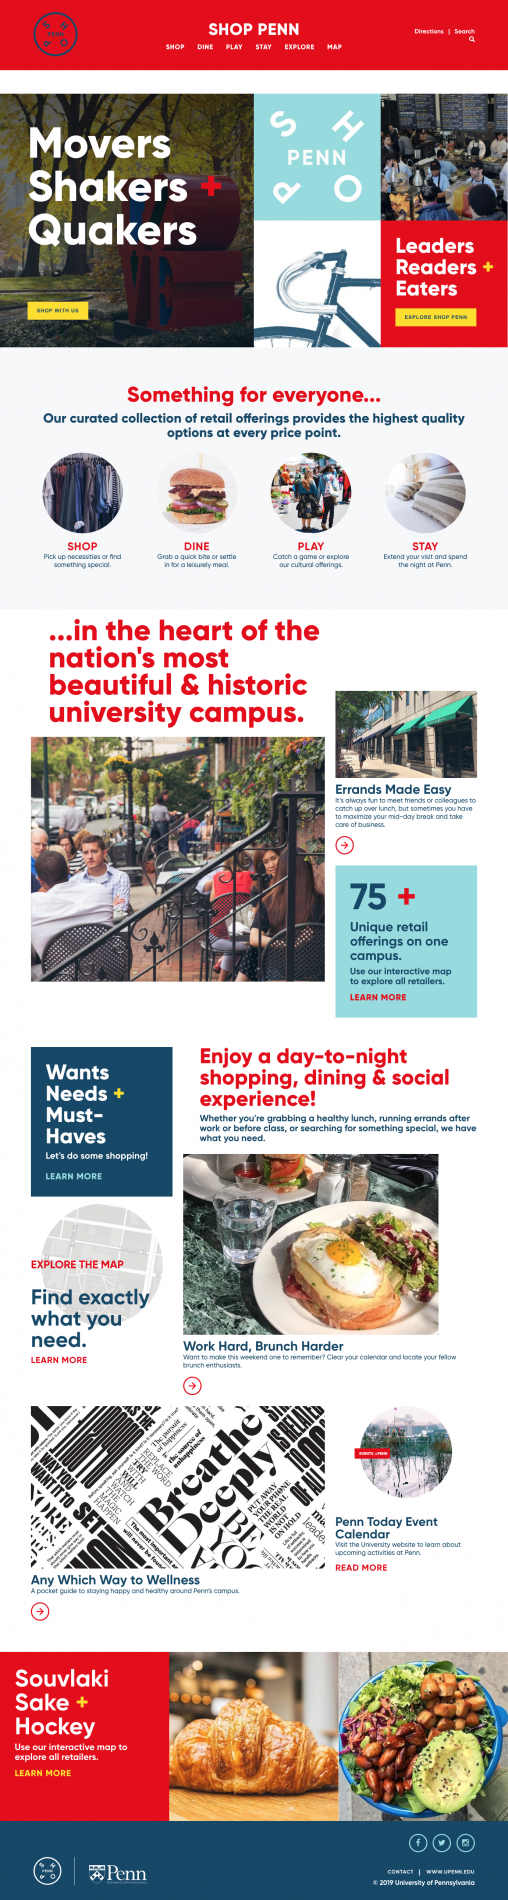 University of Pennsylvania's Shop Penn Website Homepage